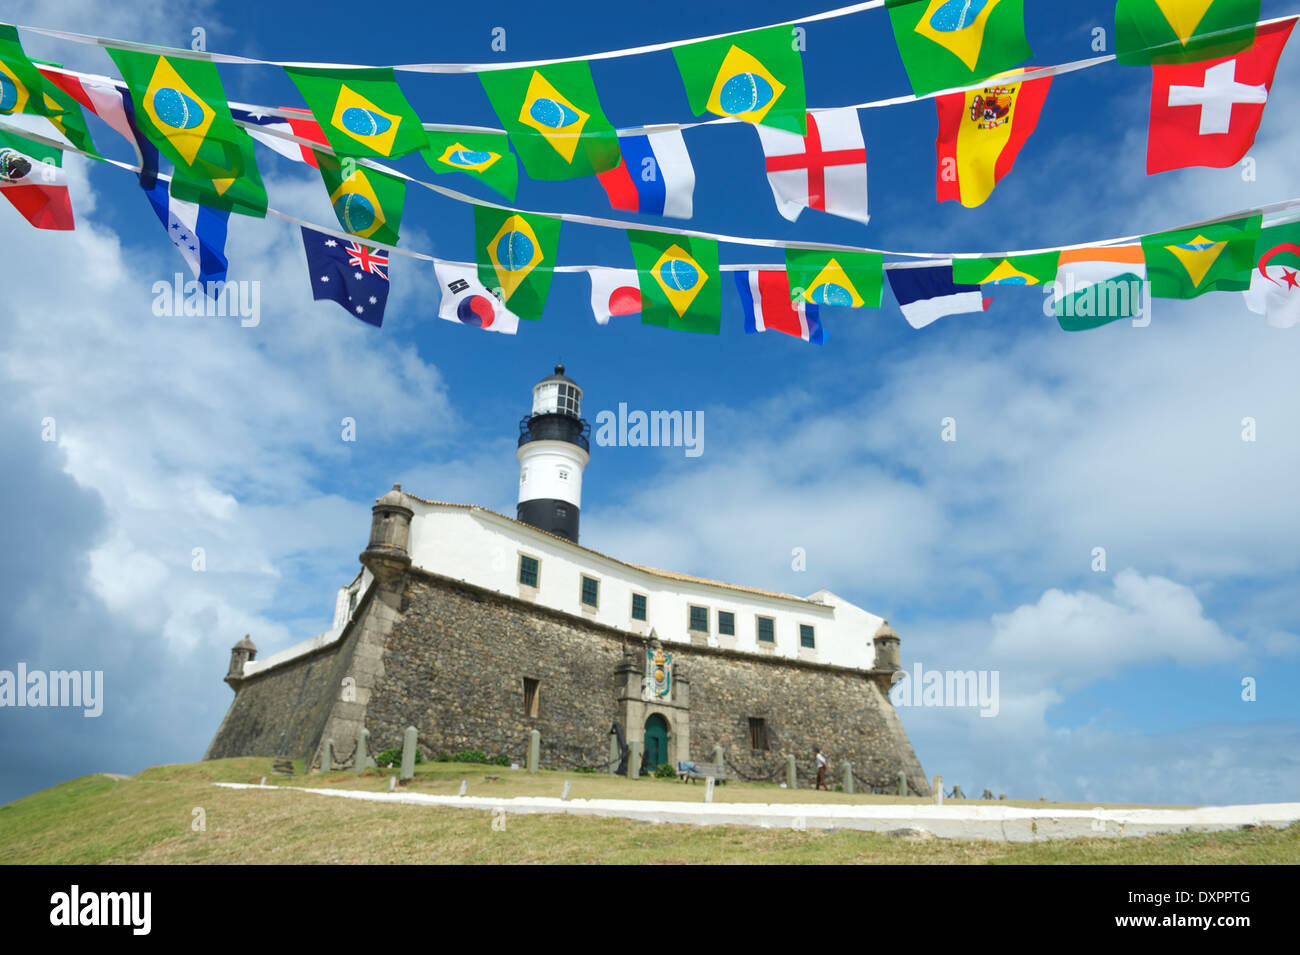 Portrait of the Farol da Barra Salvador Brazil lighthouse with celebratory international flag bunting Stock Photo